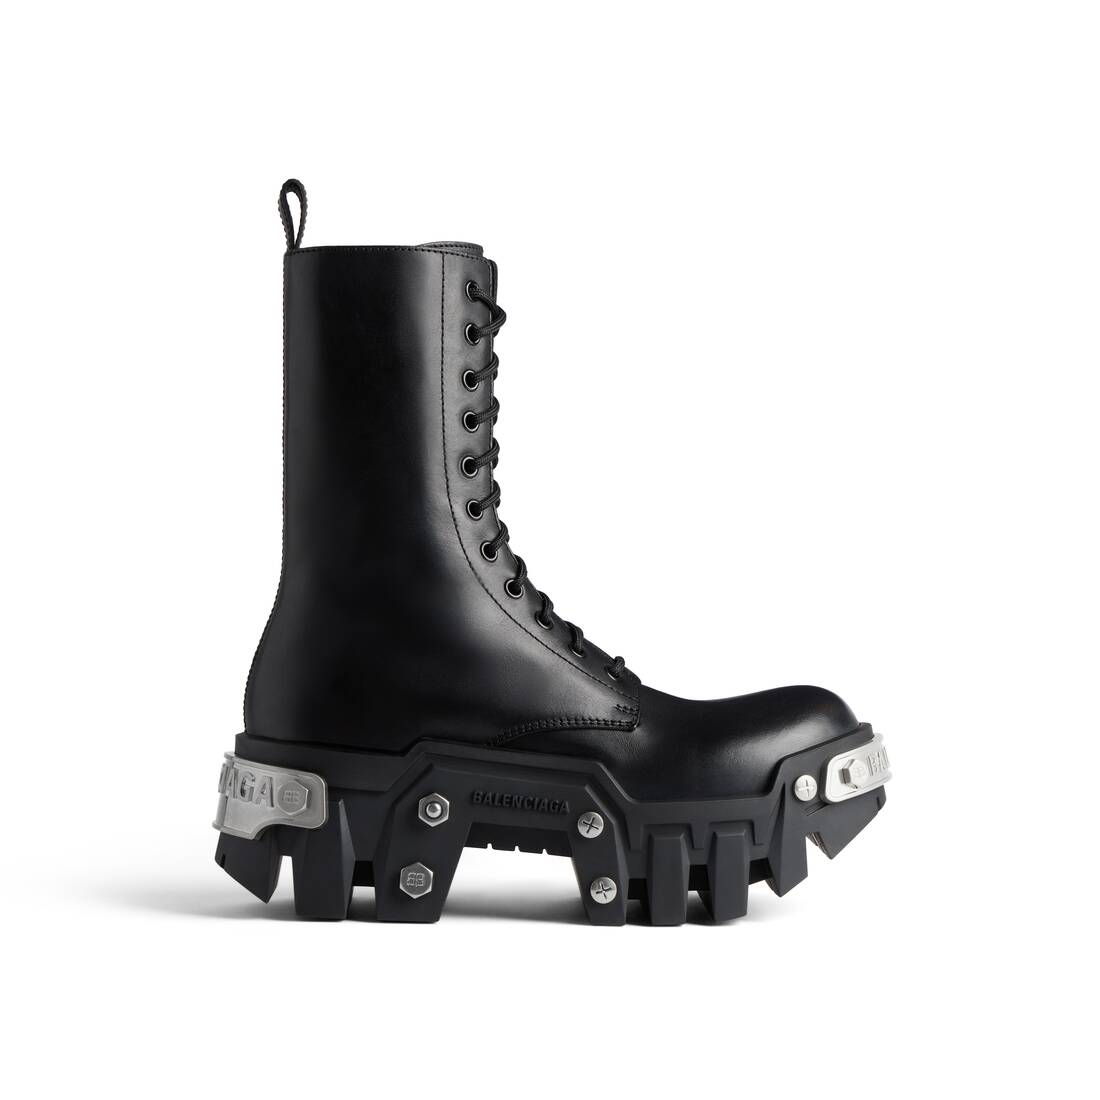 Men's Bulldozer Lace-up Boot in Black